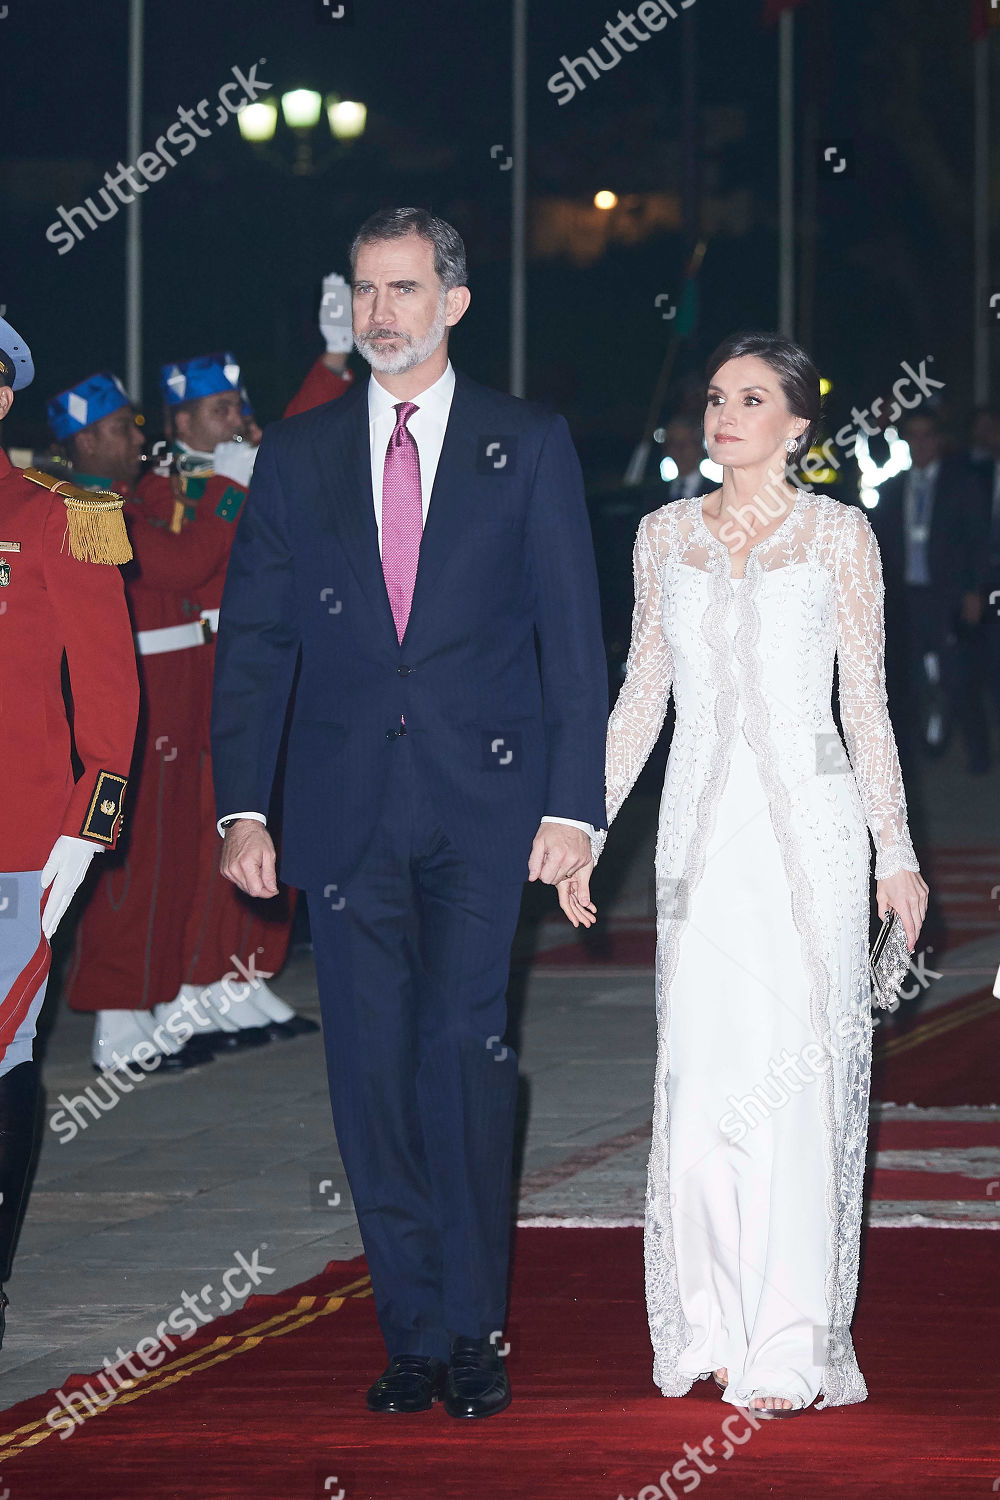 spanish-royals-visit-morocco-rabat-morocco-shutterstock-editorial-10104332a.jpg